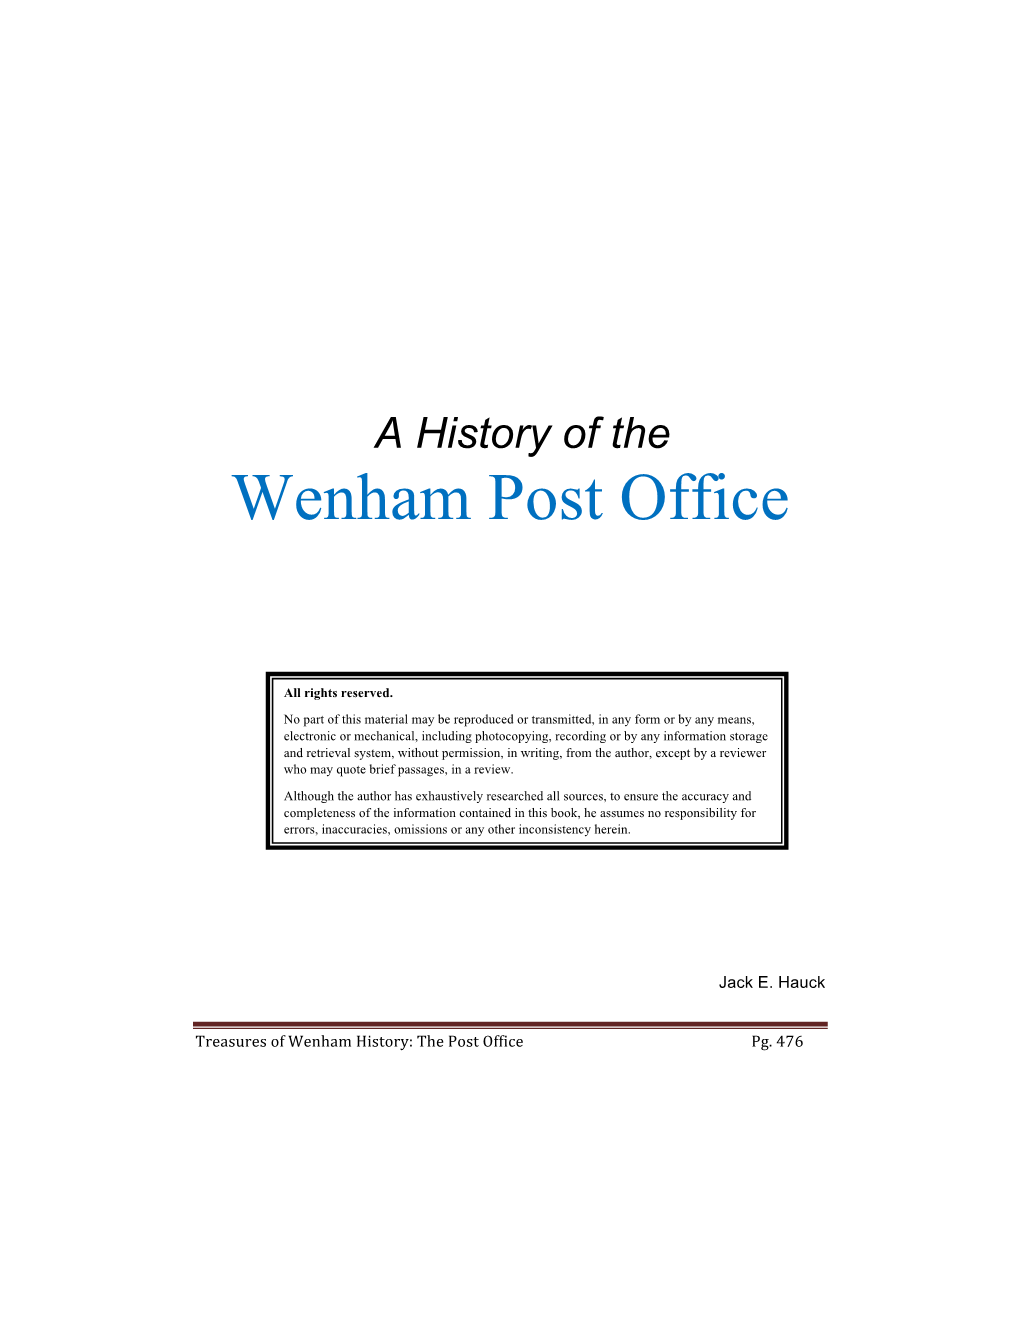 Wenham Post Office